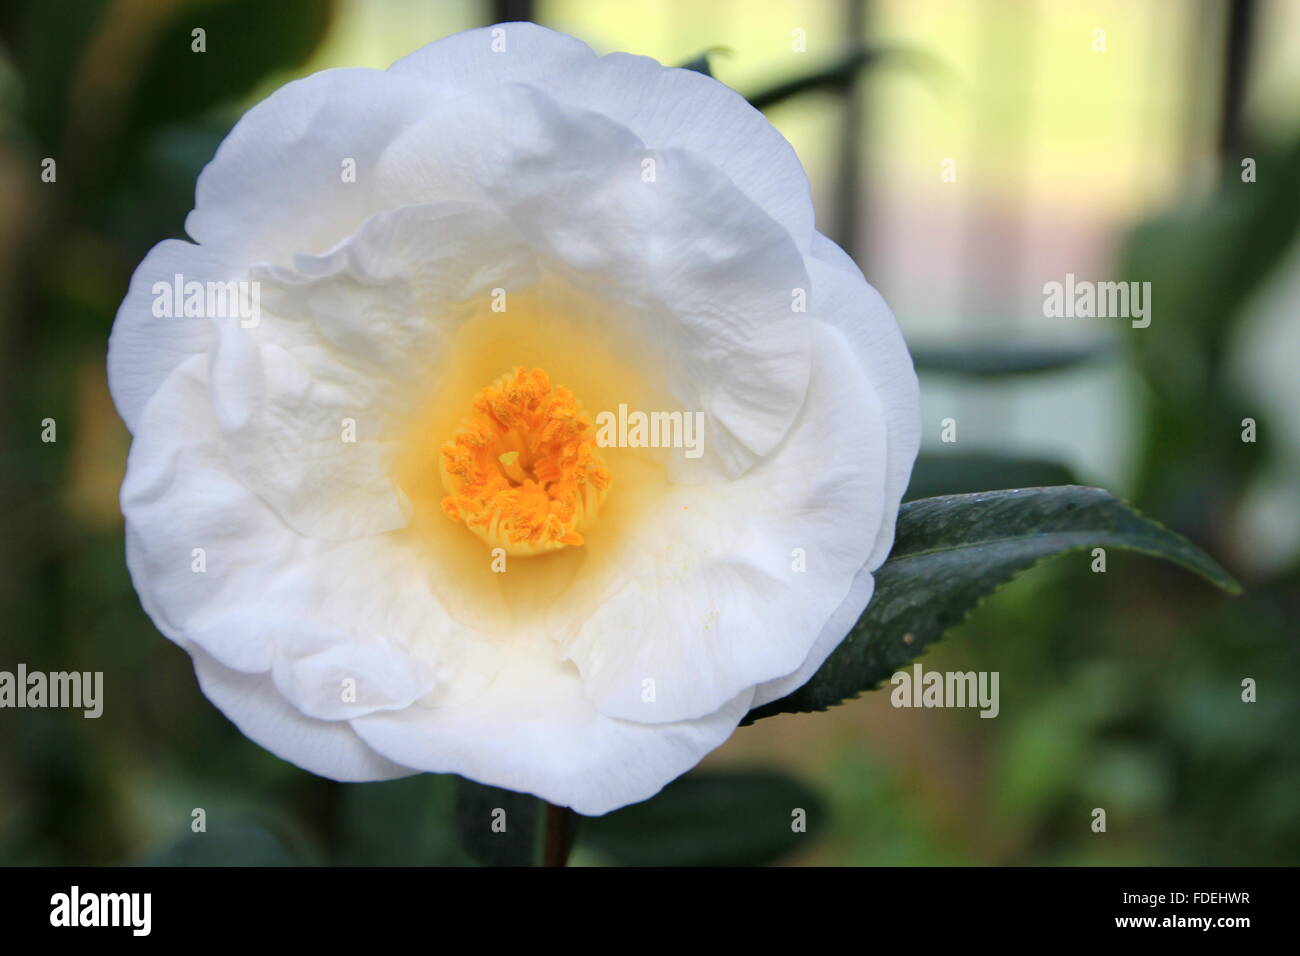 white beautiful camelia flower in the garden Stock Photo